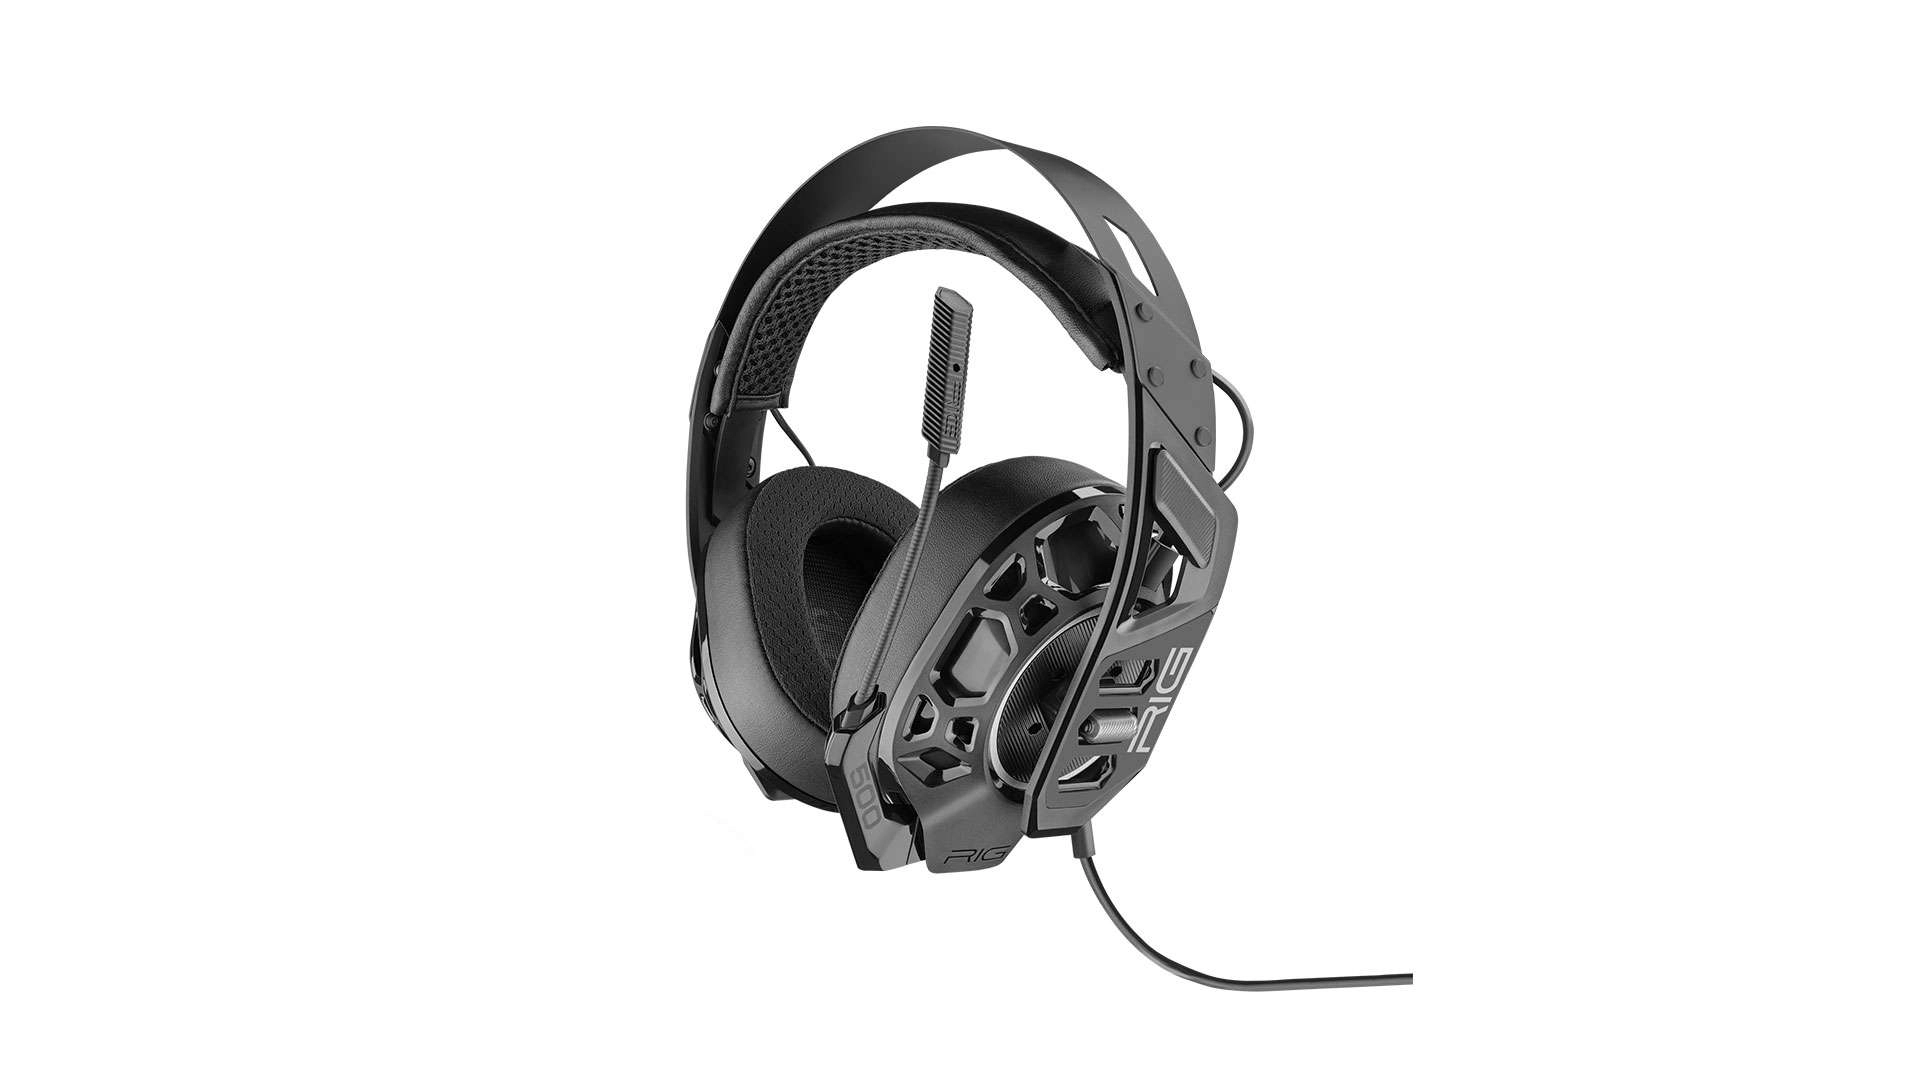 Rig 500 Pro HX Gen 2 headset